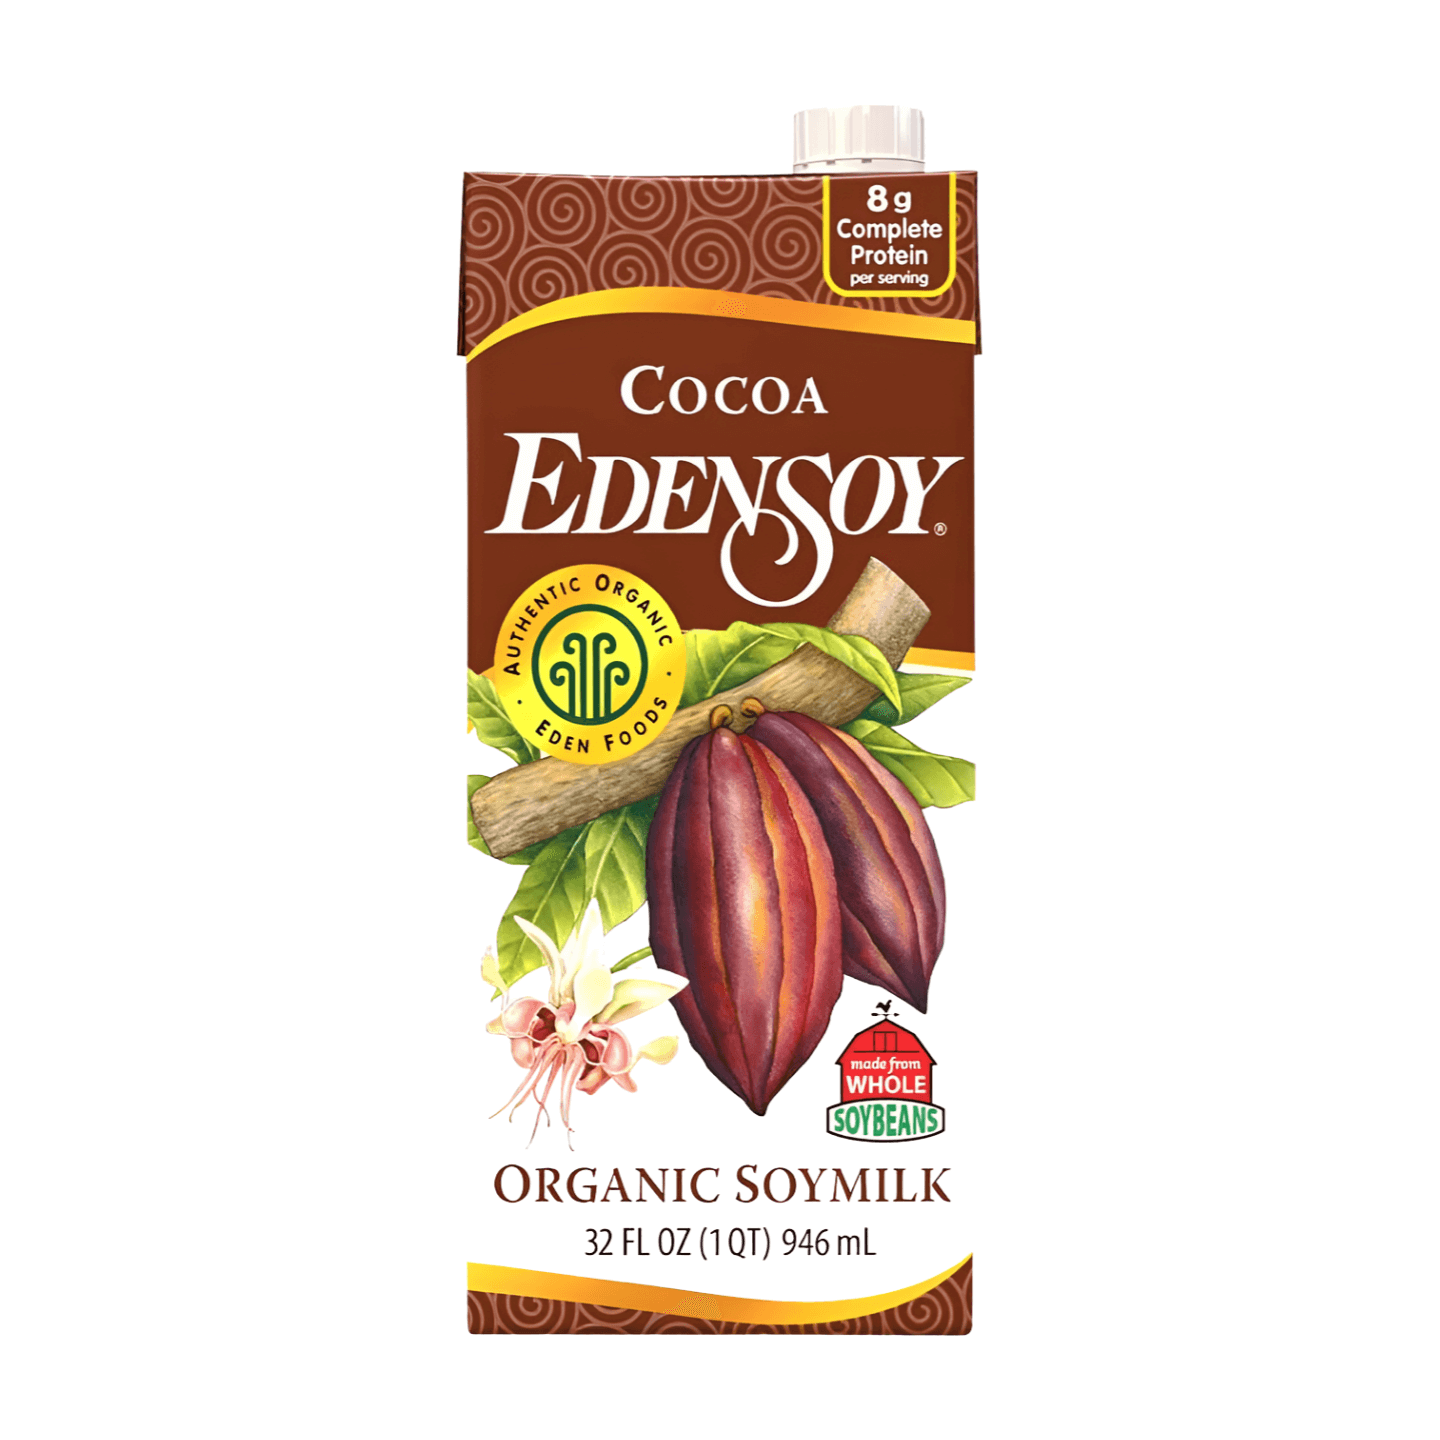 Cocoa Edensoy